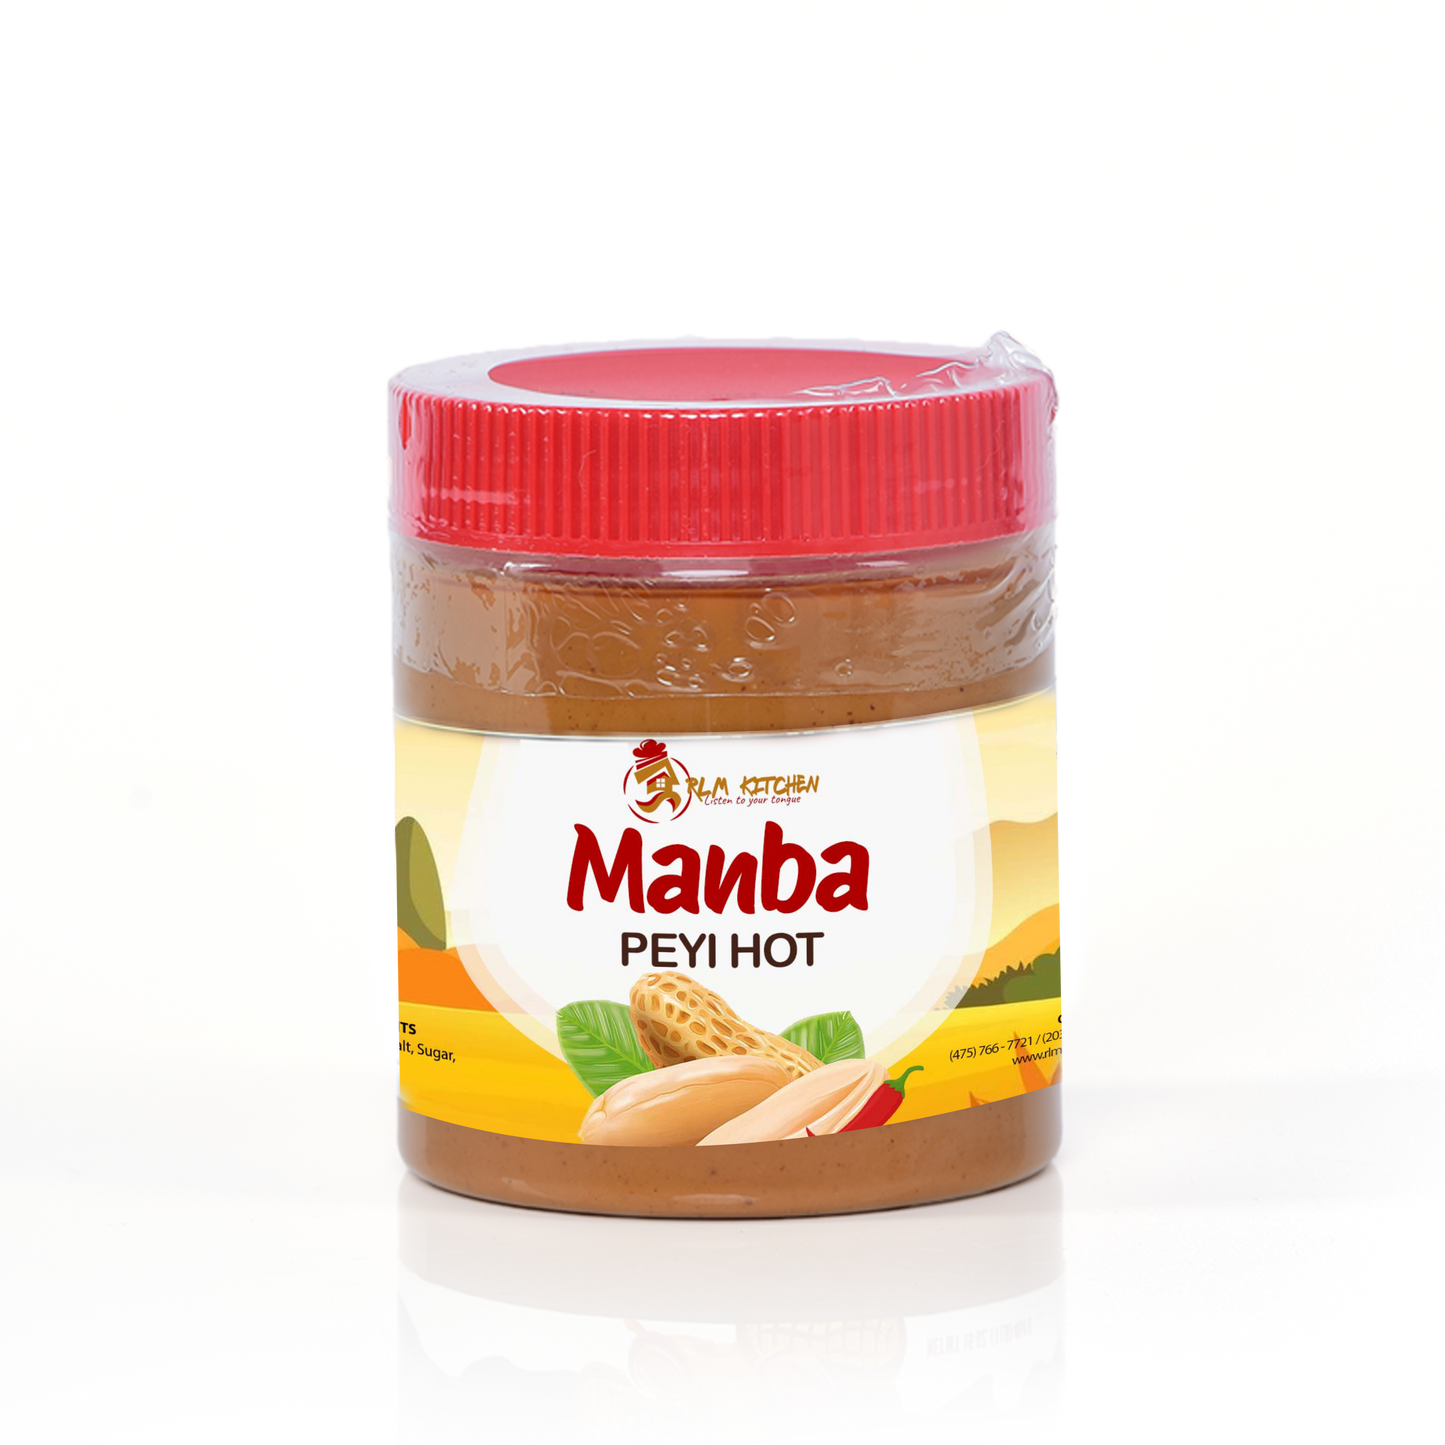 Manba (spicy peanut butter)